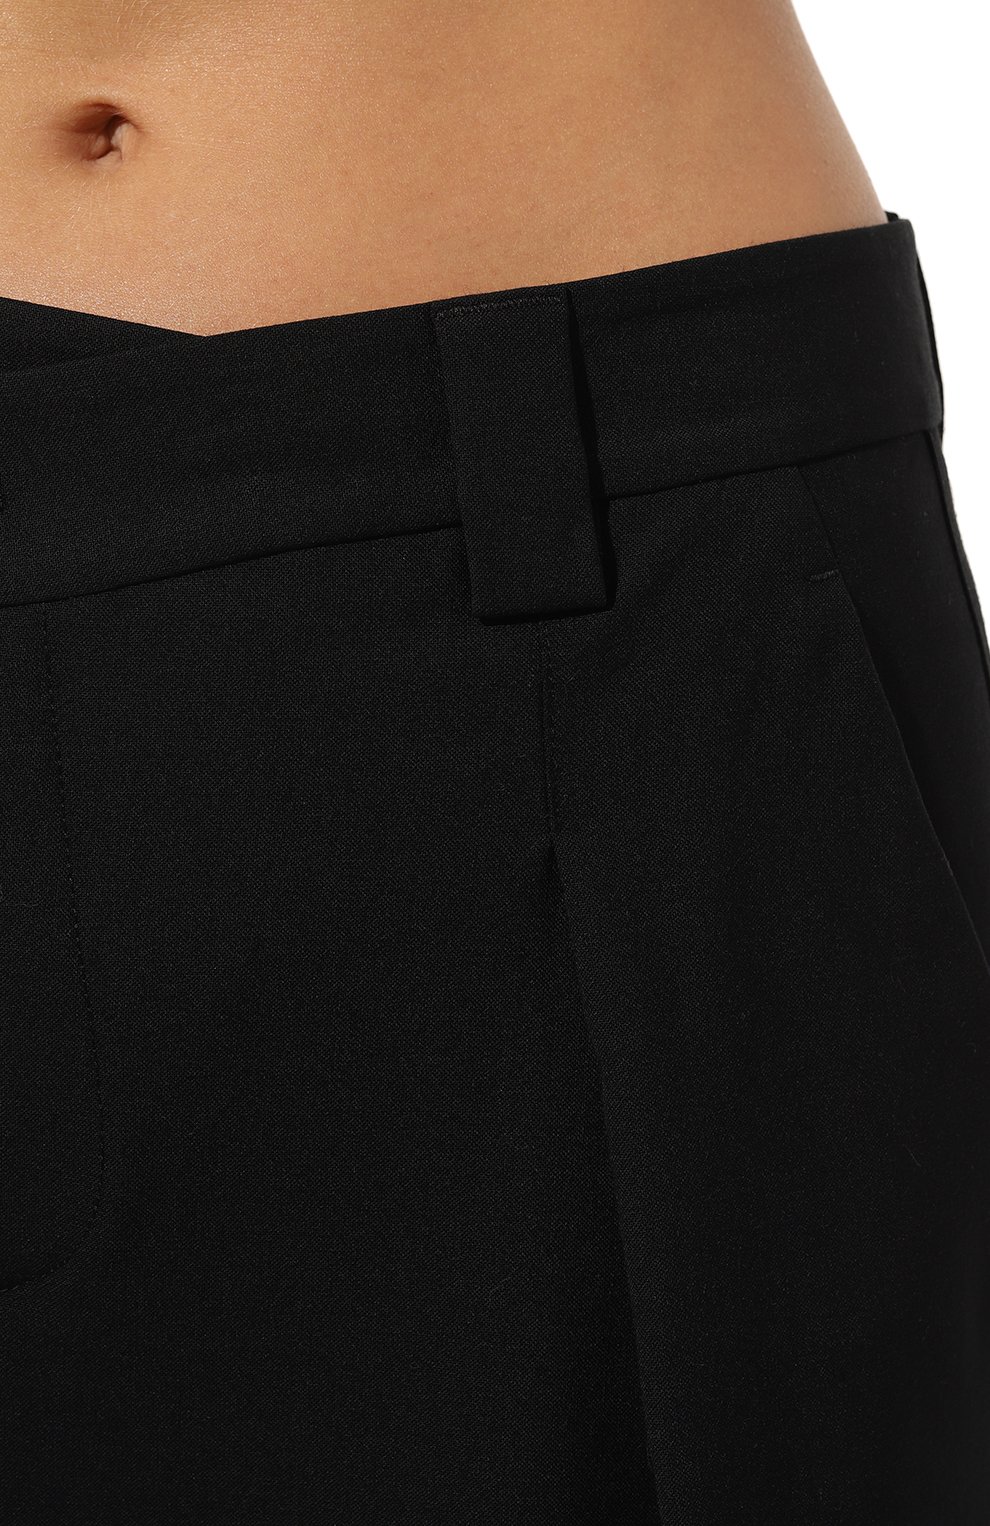 Женские брюки CLOSED черного цвета, арт. C91081-35P-22 | Фото 5 (Силуэт Ж (брюк и и джинсы): Широкие; Материал внешний: Шерсть, Синтетический материал; Длина (брюки, джинсы): Стандартные; Женское Кросс-КТ: Брюки-одежда; Материал сплава: Проставлено; Драгоценные камни: Проставлено; Стили: Кэжуэл)